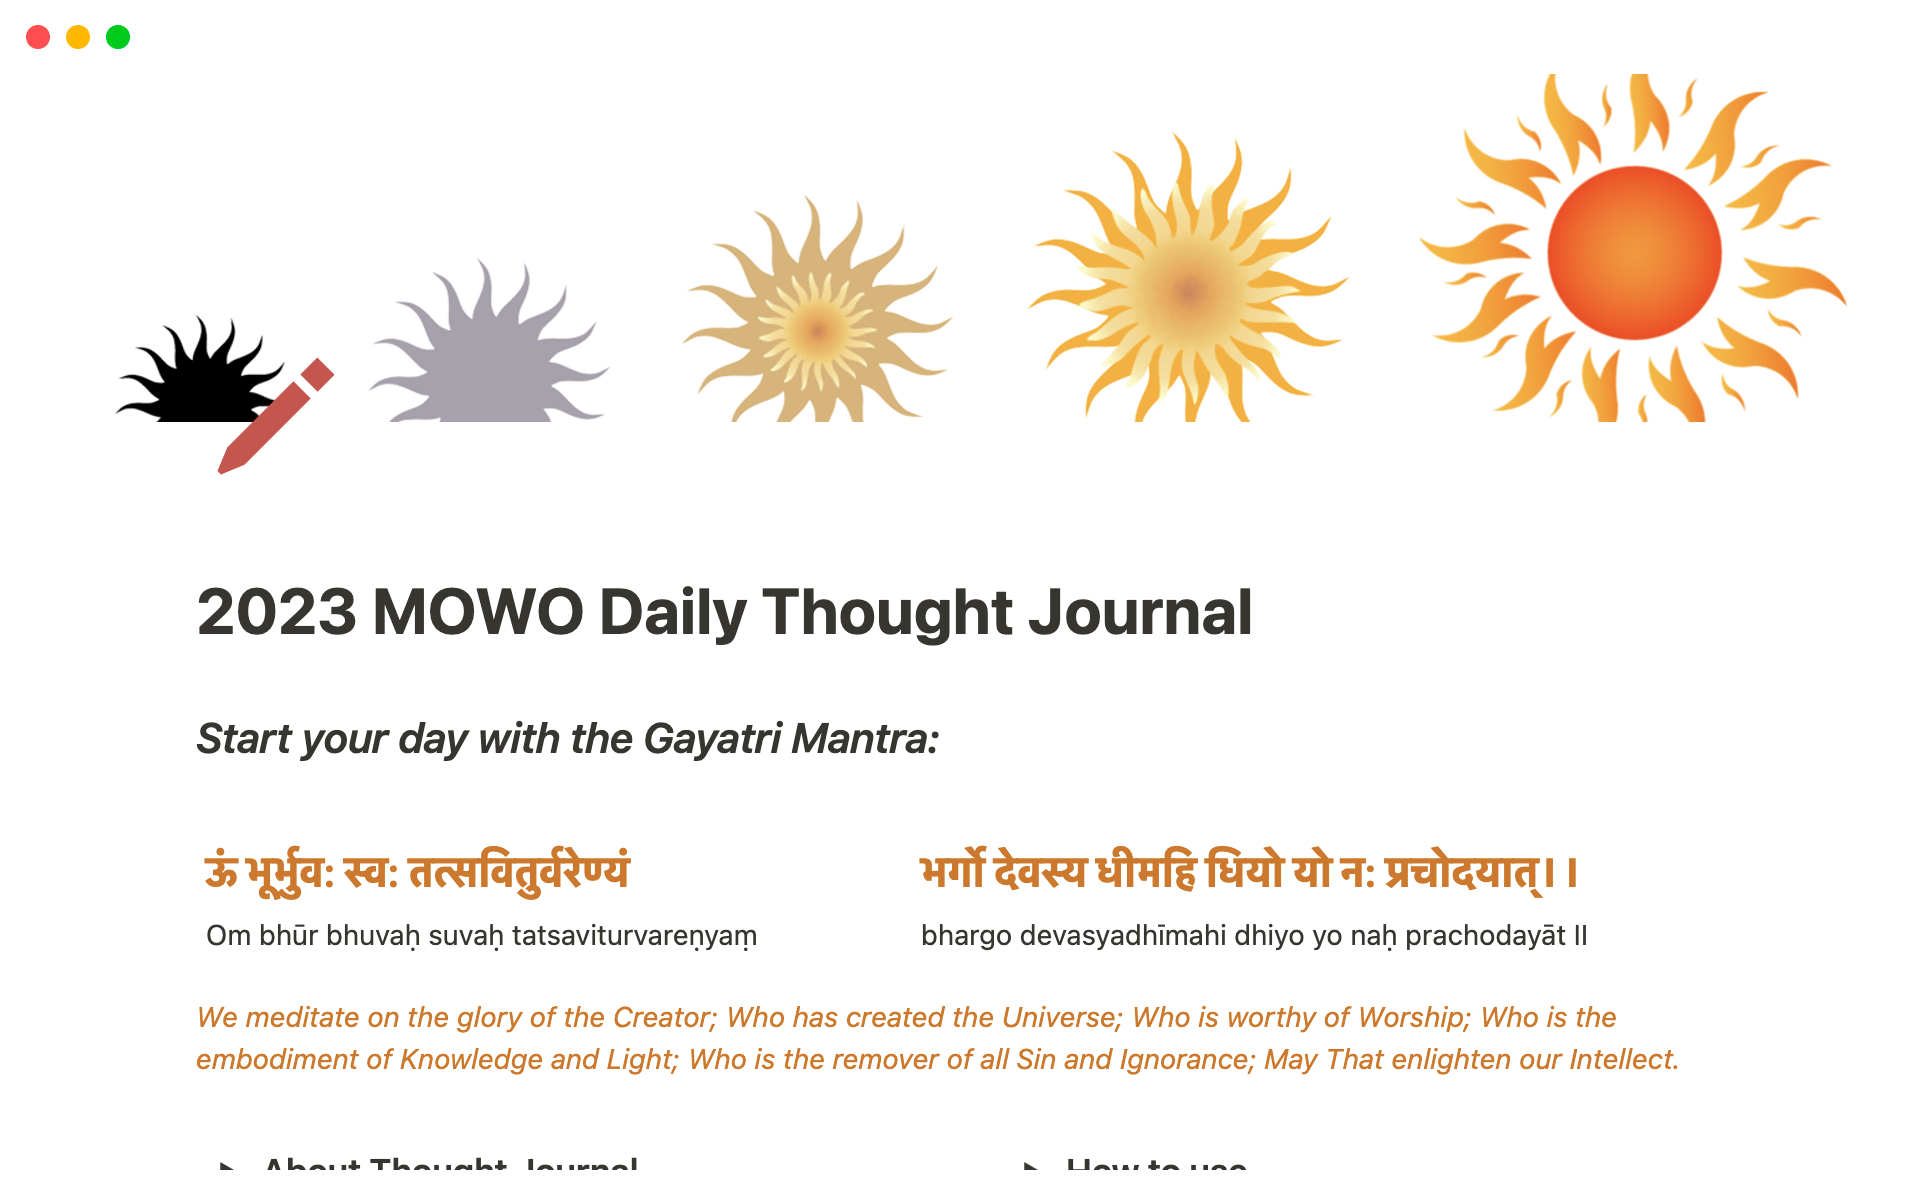 Aperçu du modèle de 2023 MOWO Daily Thought Journal